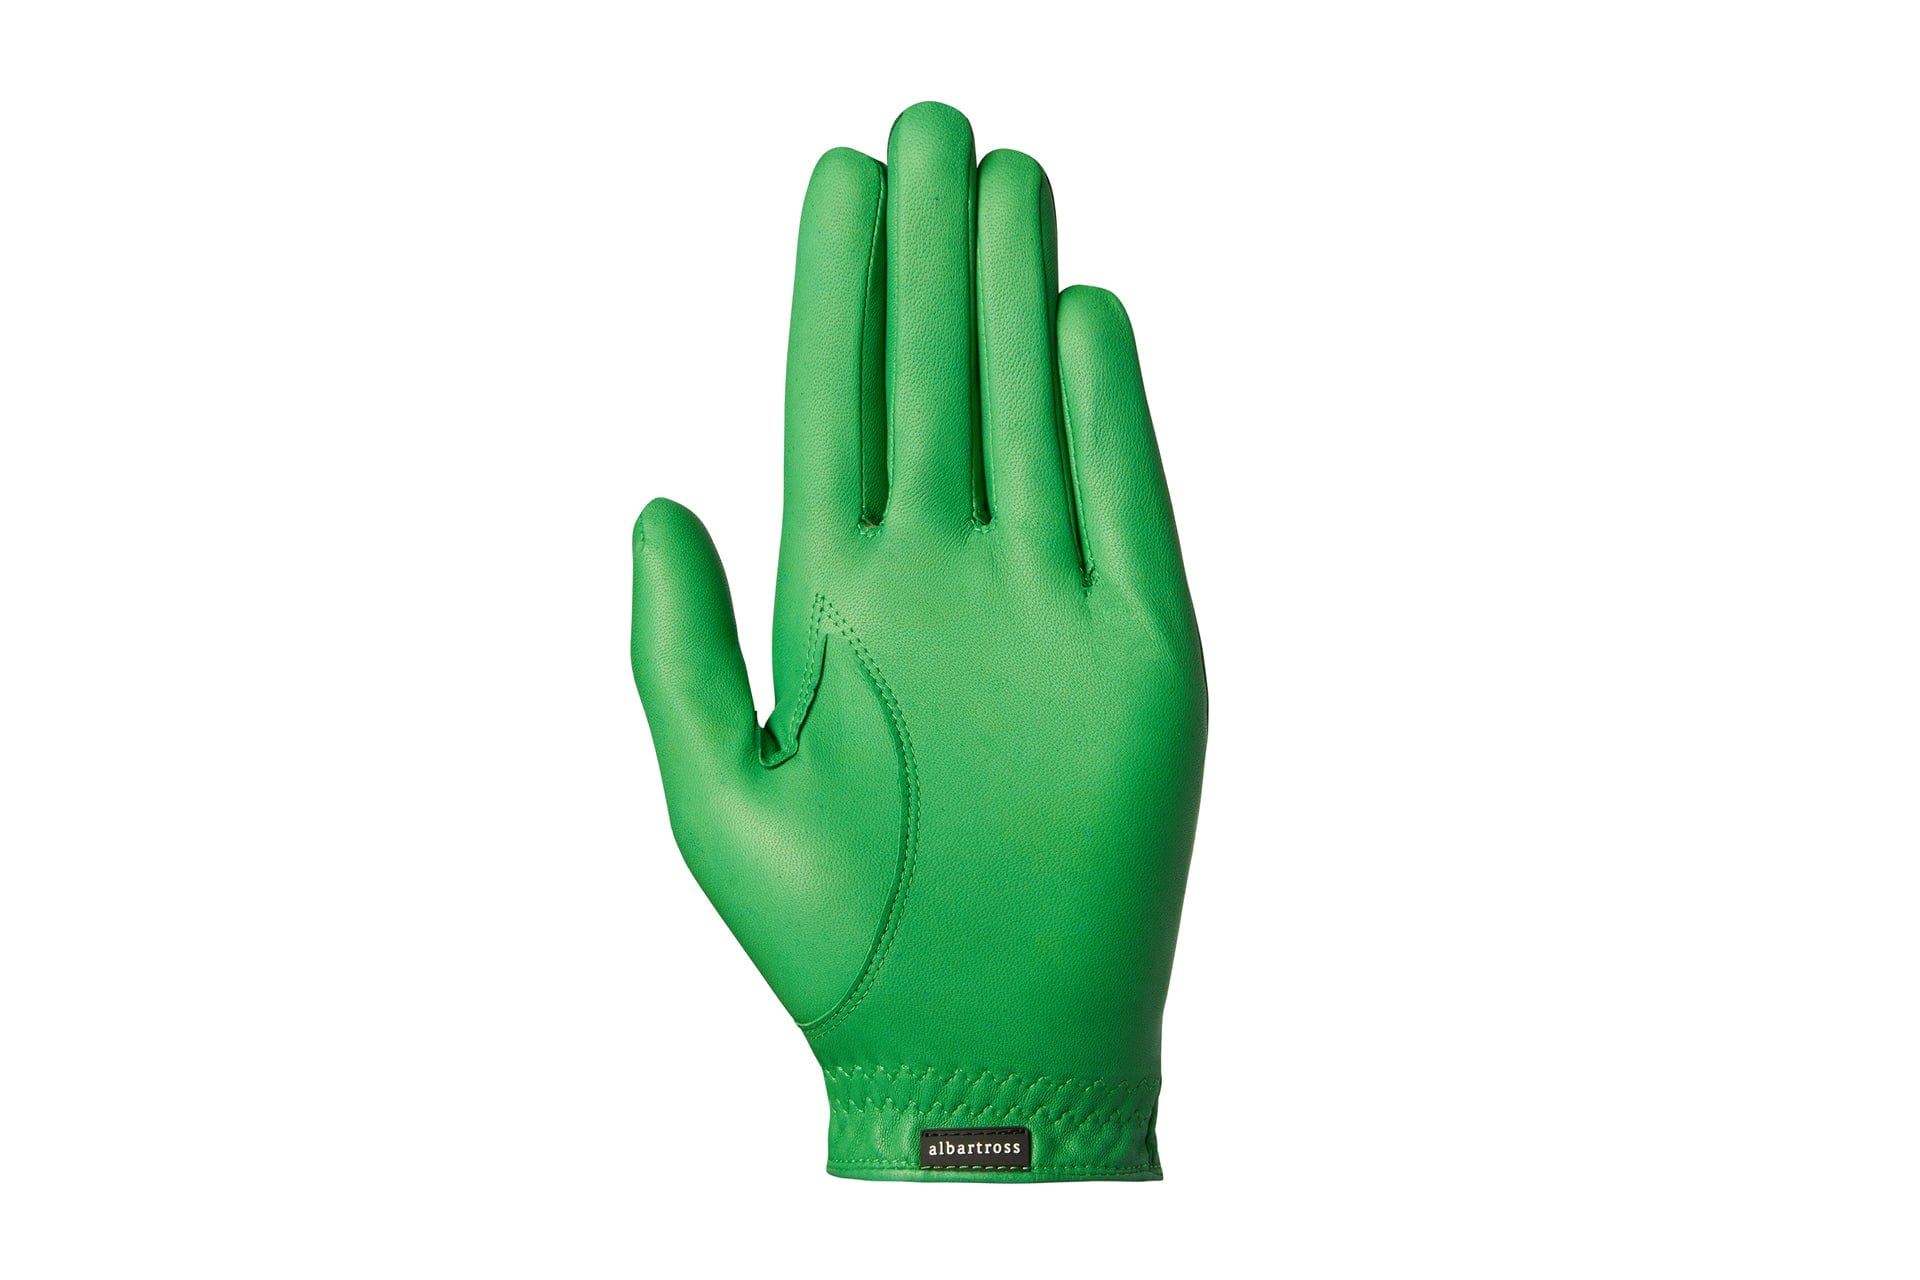 Men's Leather Golf Glove | Green Cabretta Leather | Royal Albartross Windsor v2 Green